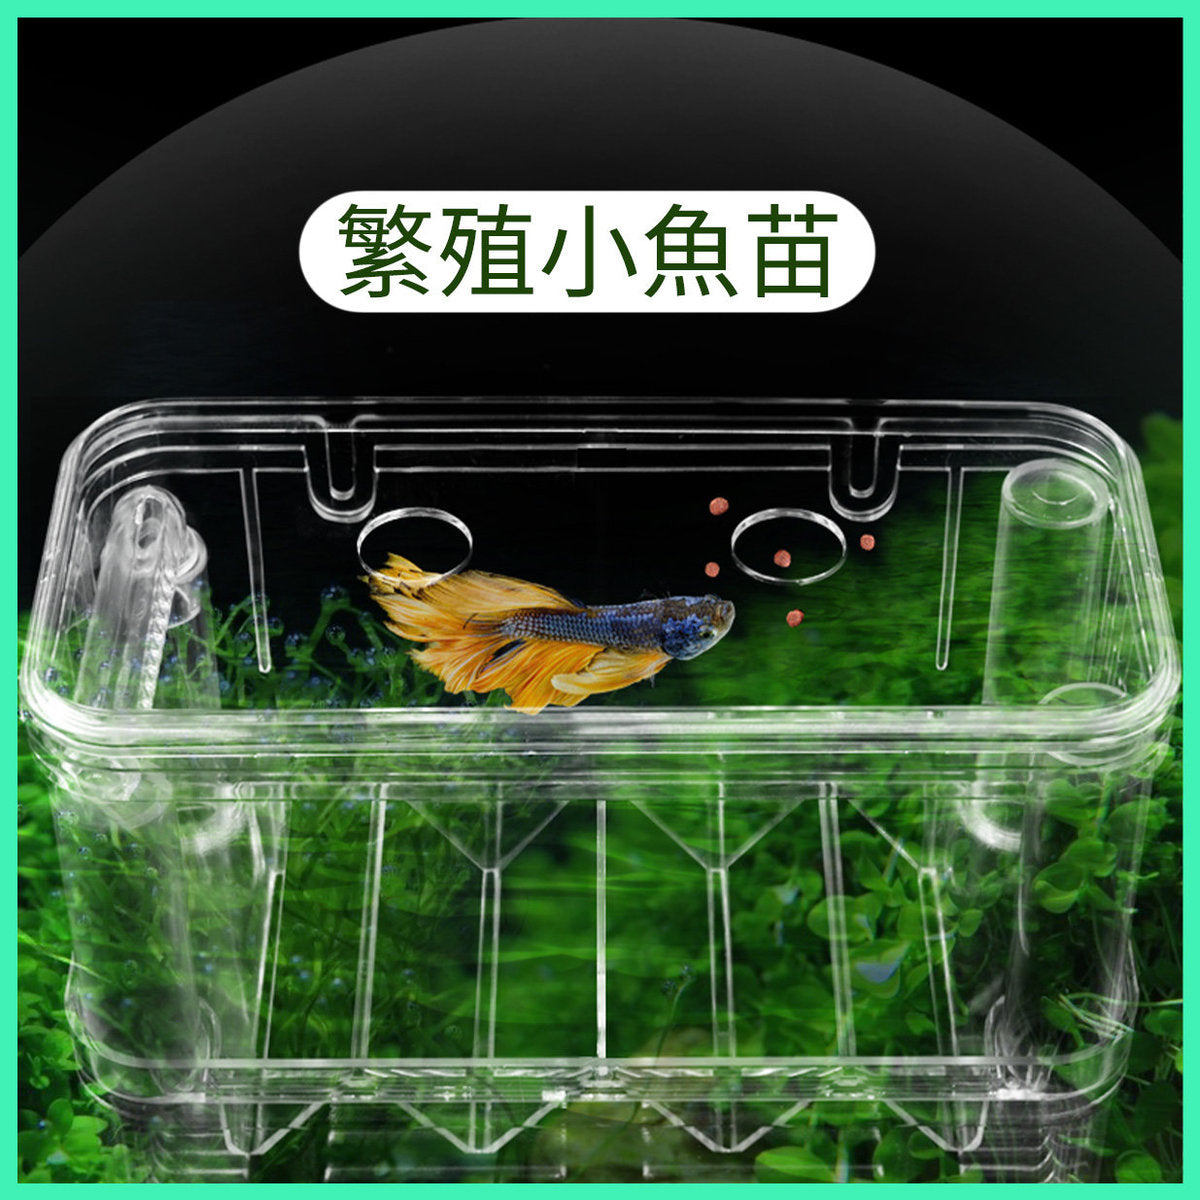 Large - fry breeding box, fish tank, guppy goldfish isolation box, separated fish partition incubator box, juvenile fish spawning incubator box 13.5x14x8cm